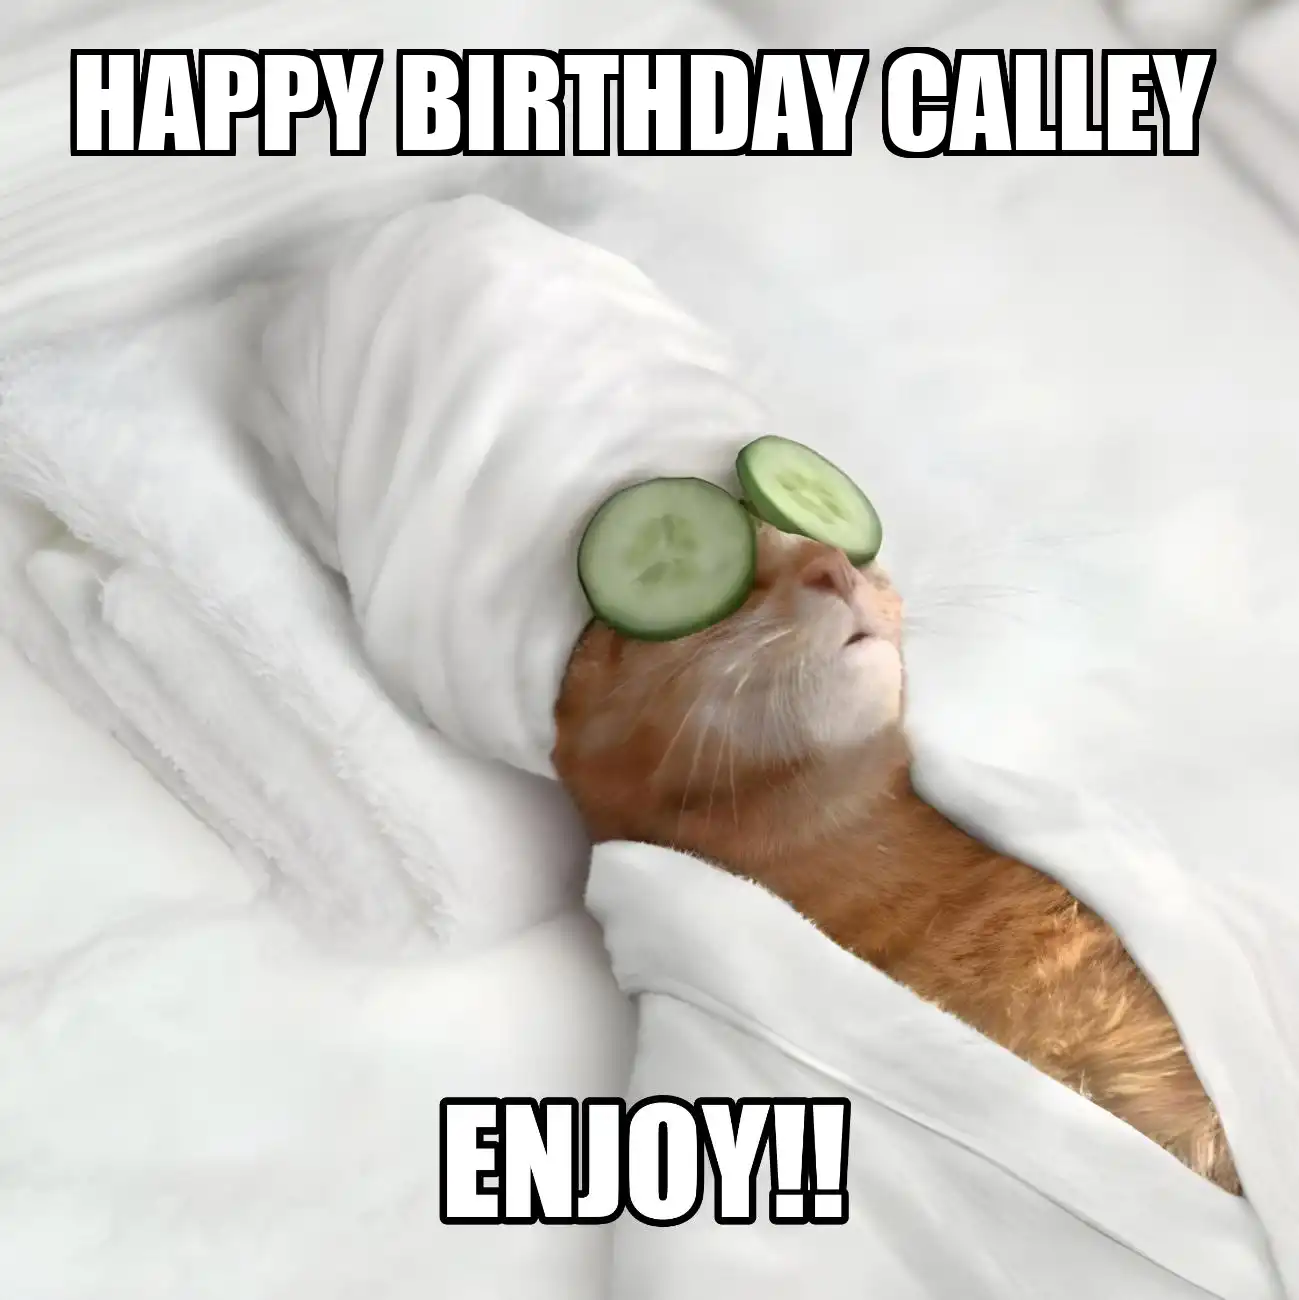 Happy Birthday Calley Enjoy Cat Meme